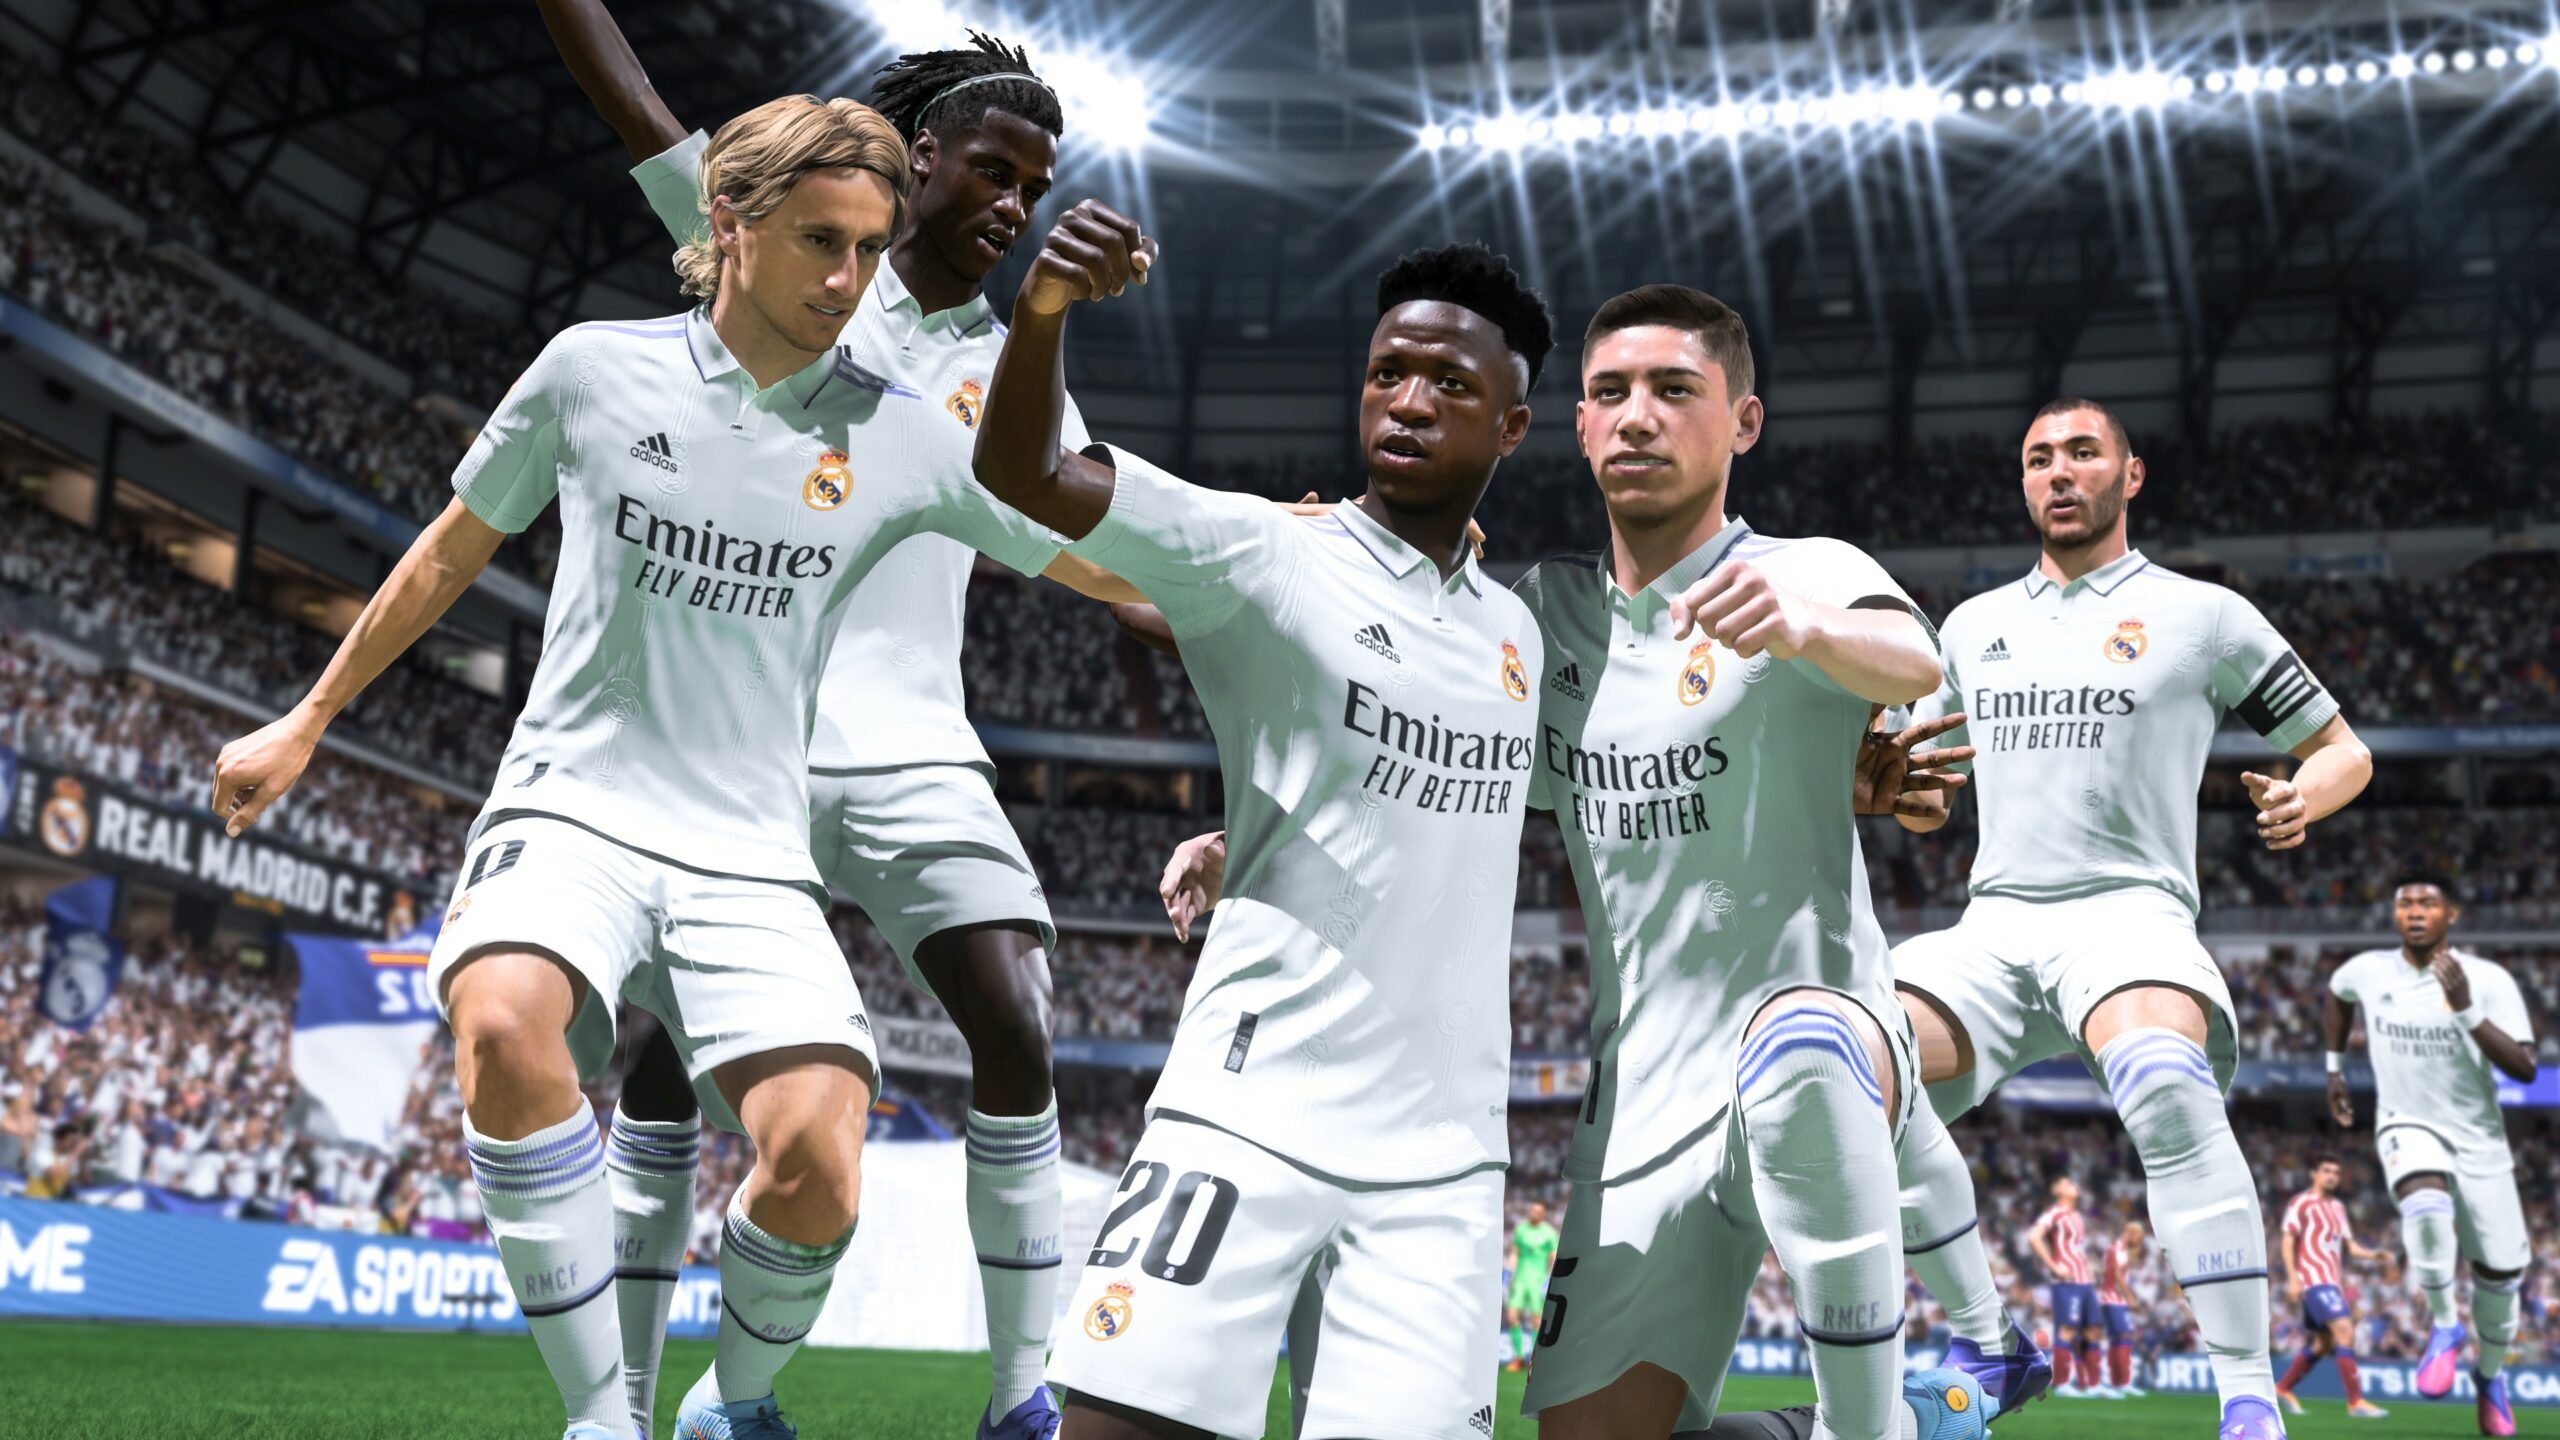 Online] FIFA 23 Ultimate PC Game Steam Origin Version Online